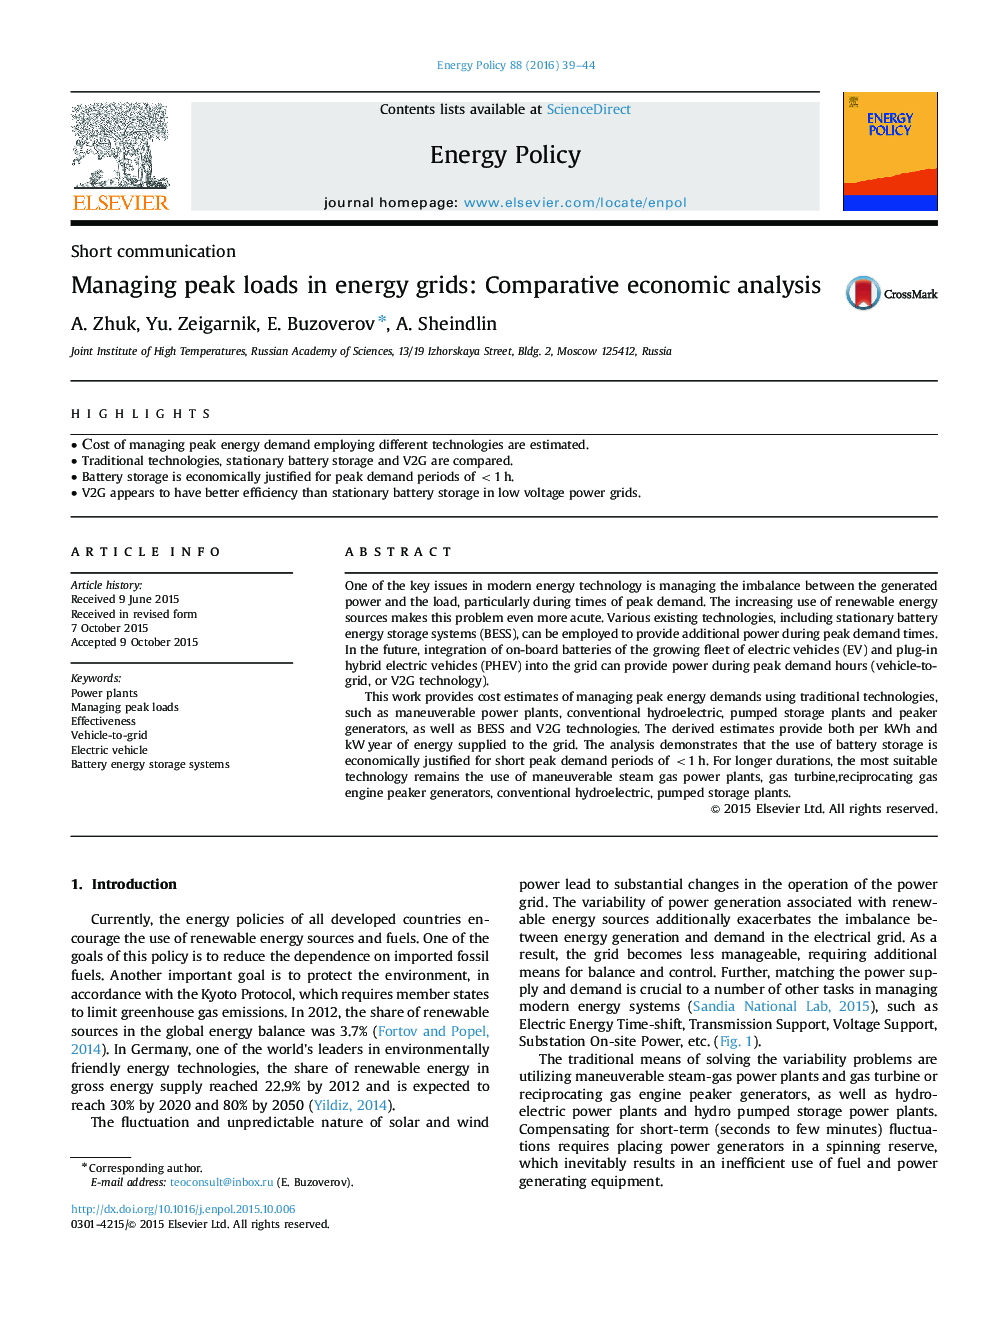 Managing peak loads in energy grids: Comparative economic analysis